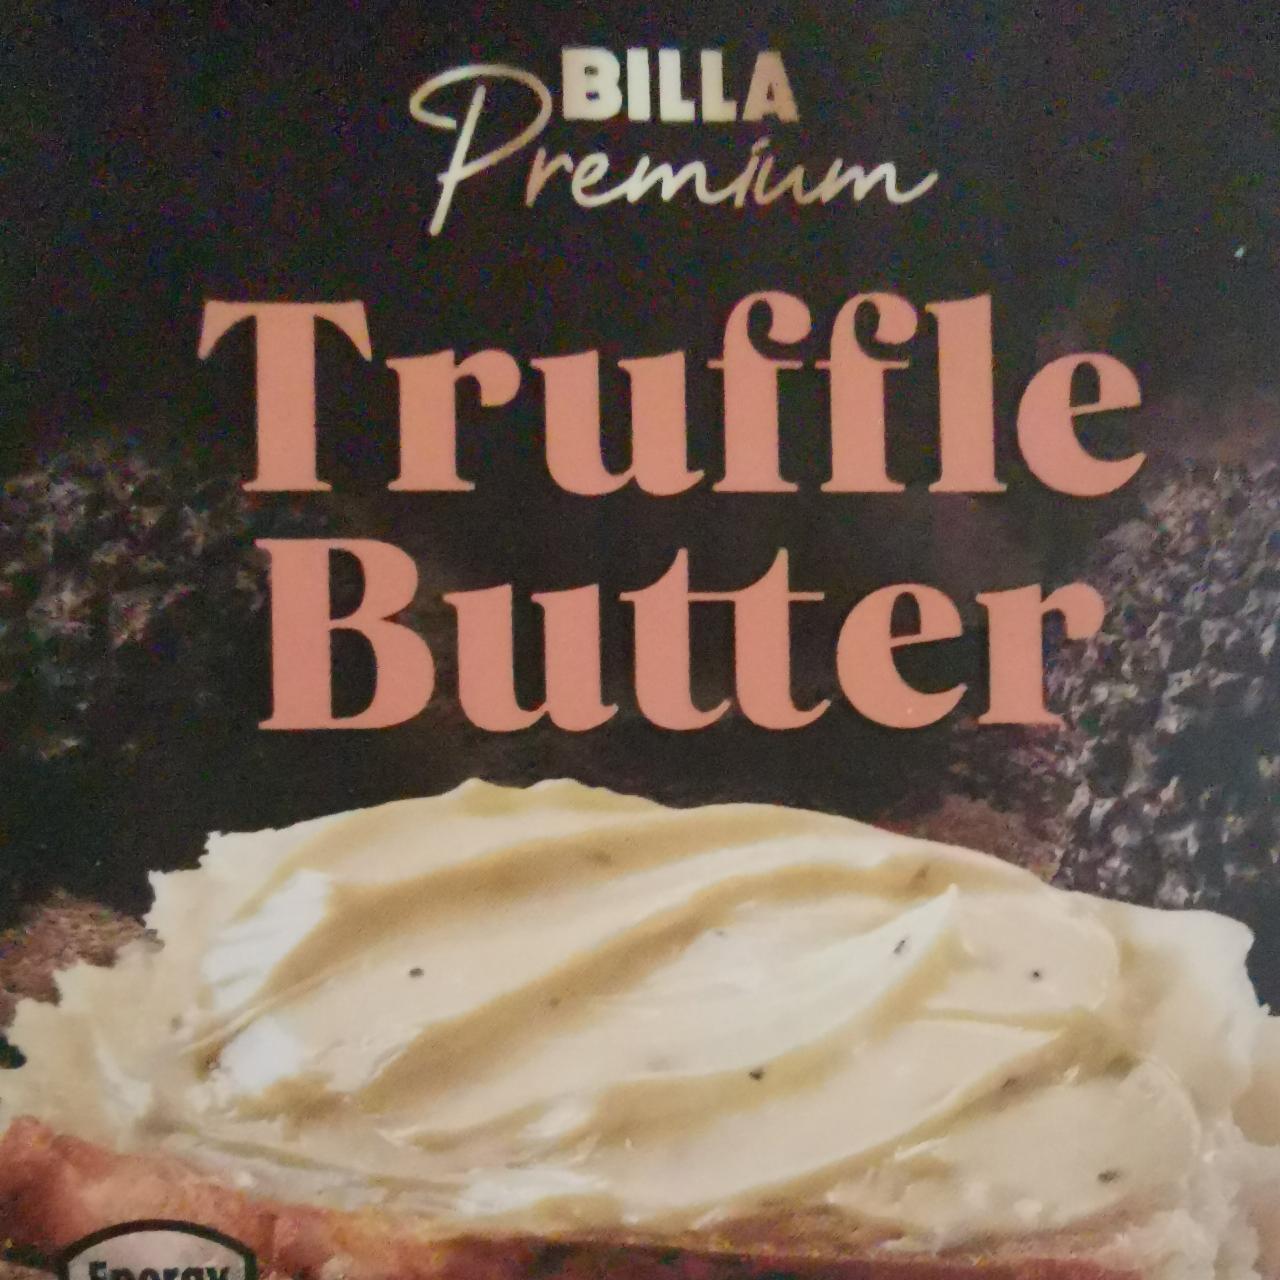 Fotografie - Truffle butter Billa Premium